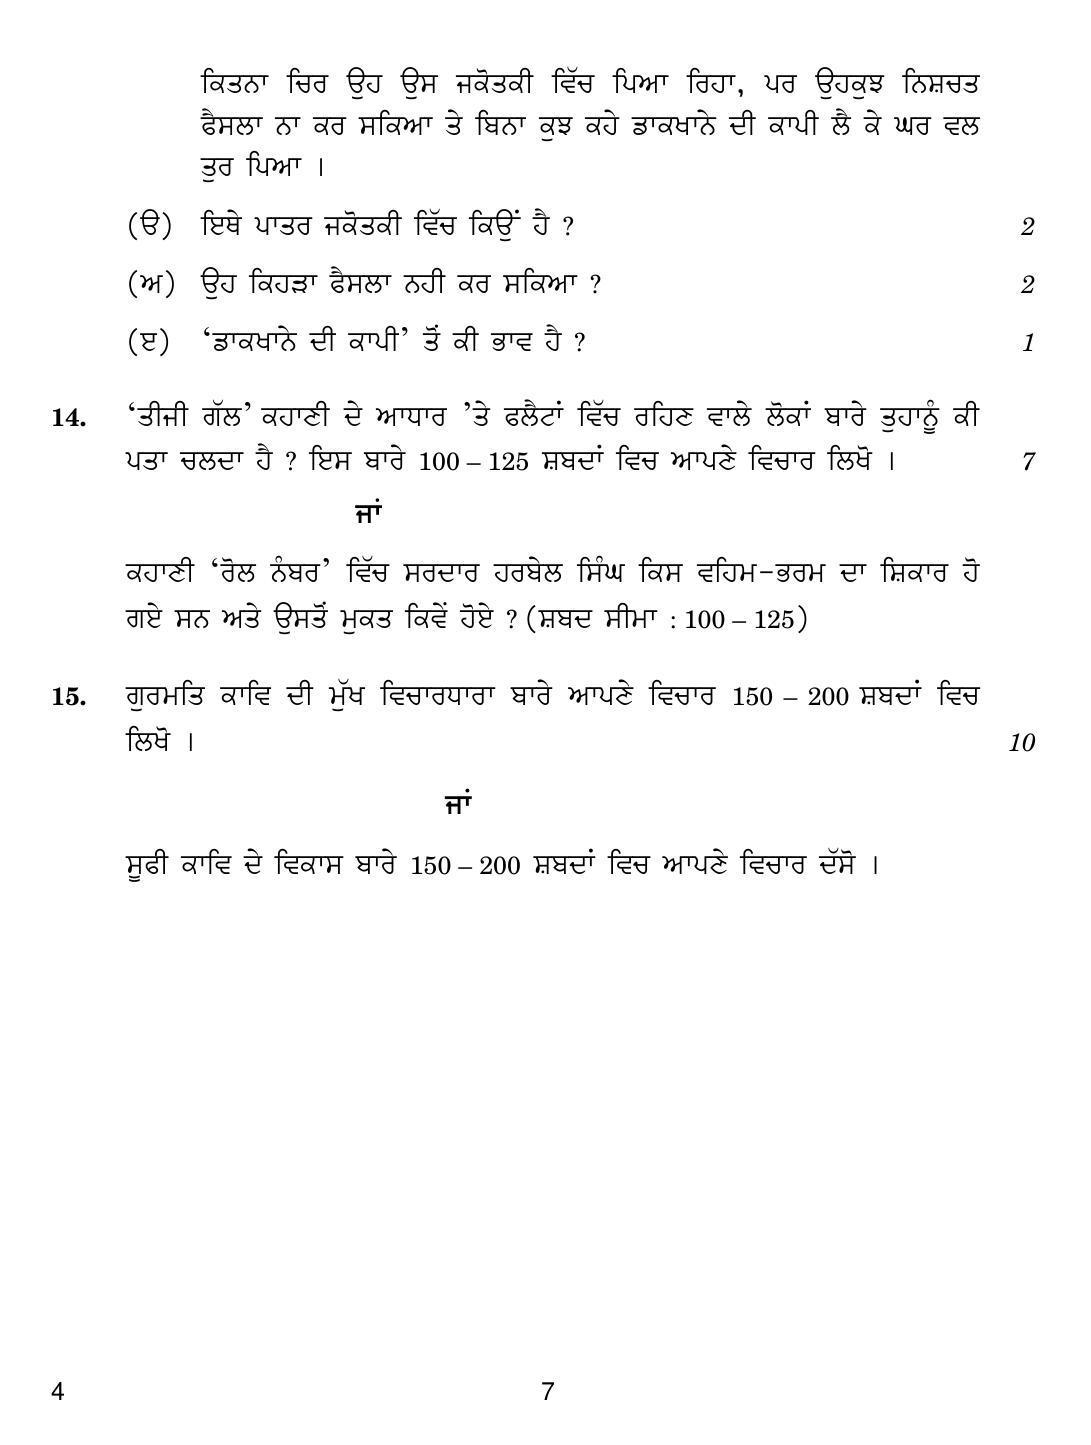 CBSE Class 12 4 Punjabi 2019 Compartment Question Paper - Page 7